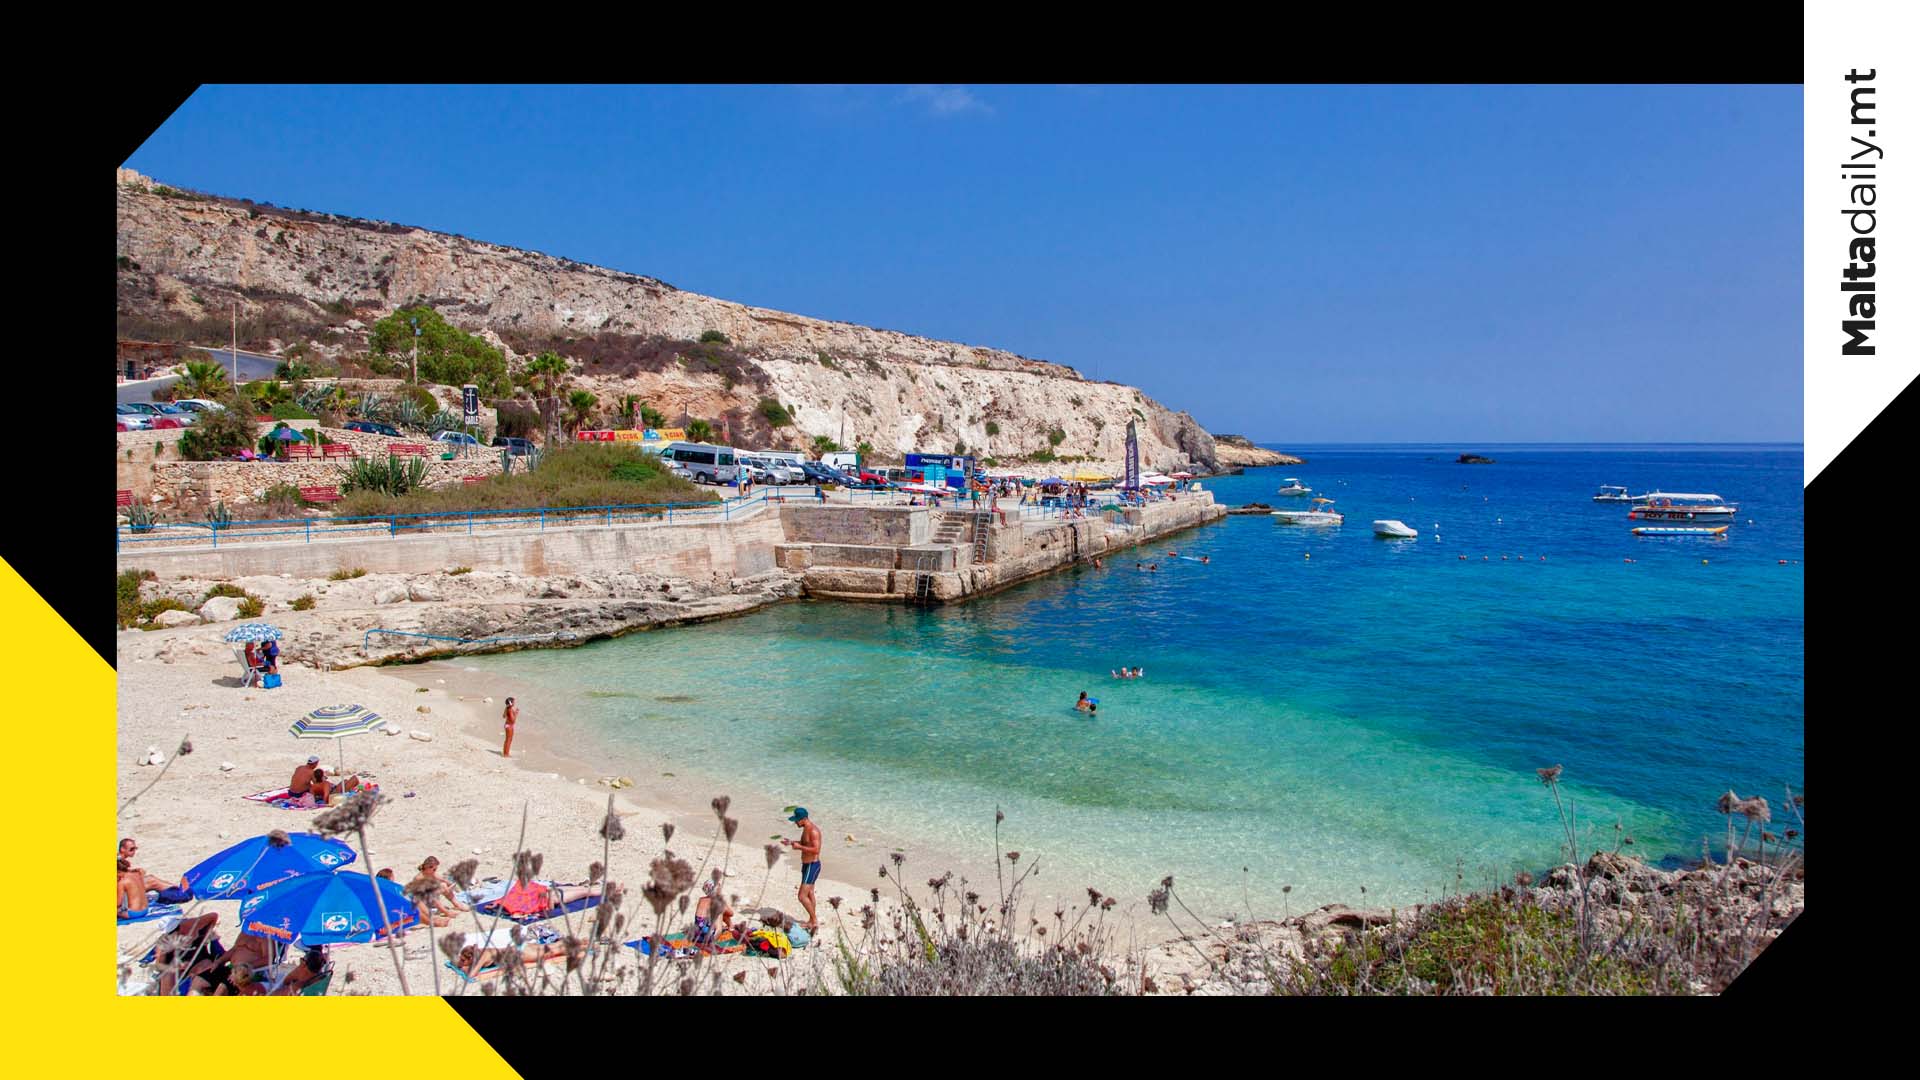 Ħondoq Bay Hotel-Port Application Turned Down By Court